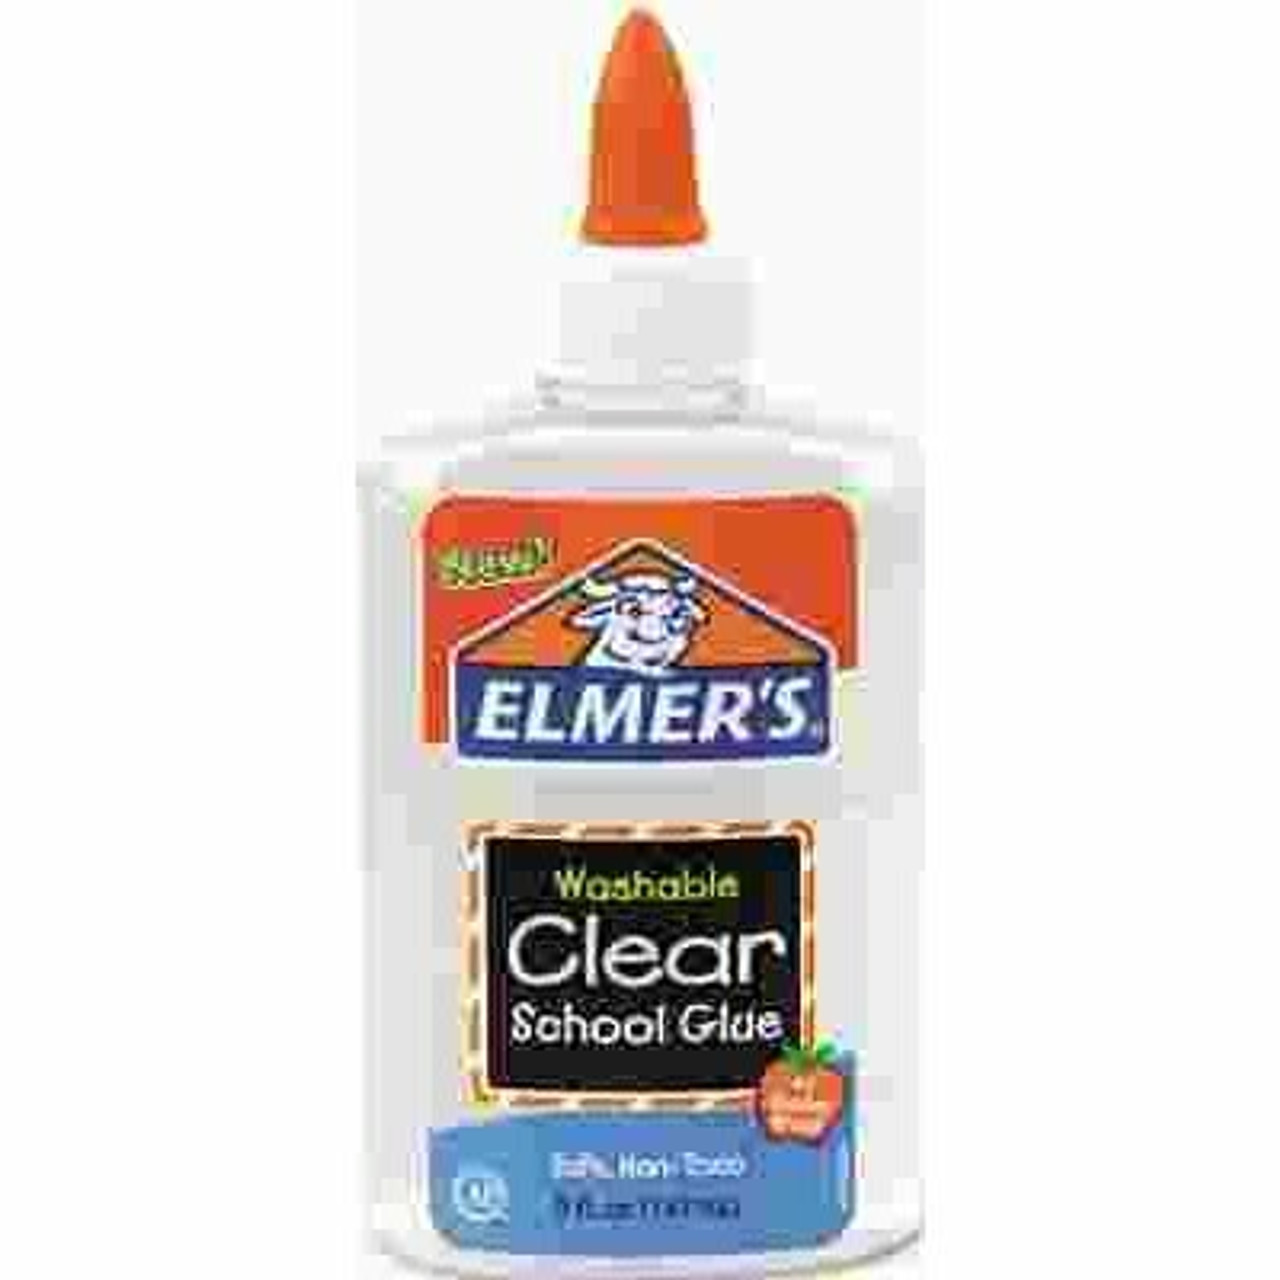 Elmer's Products, Inc. Elmer's Washable School Glue, 5 Oz, Liquid